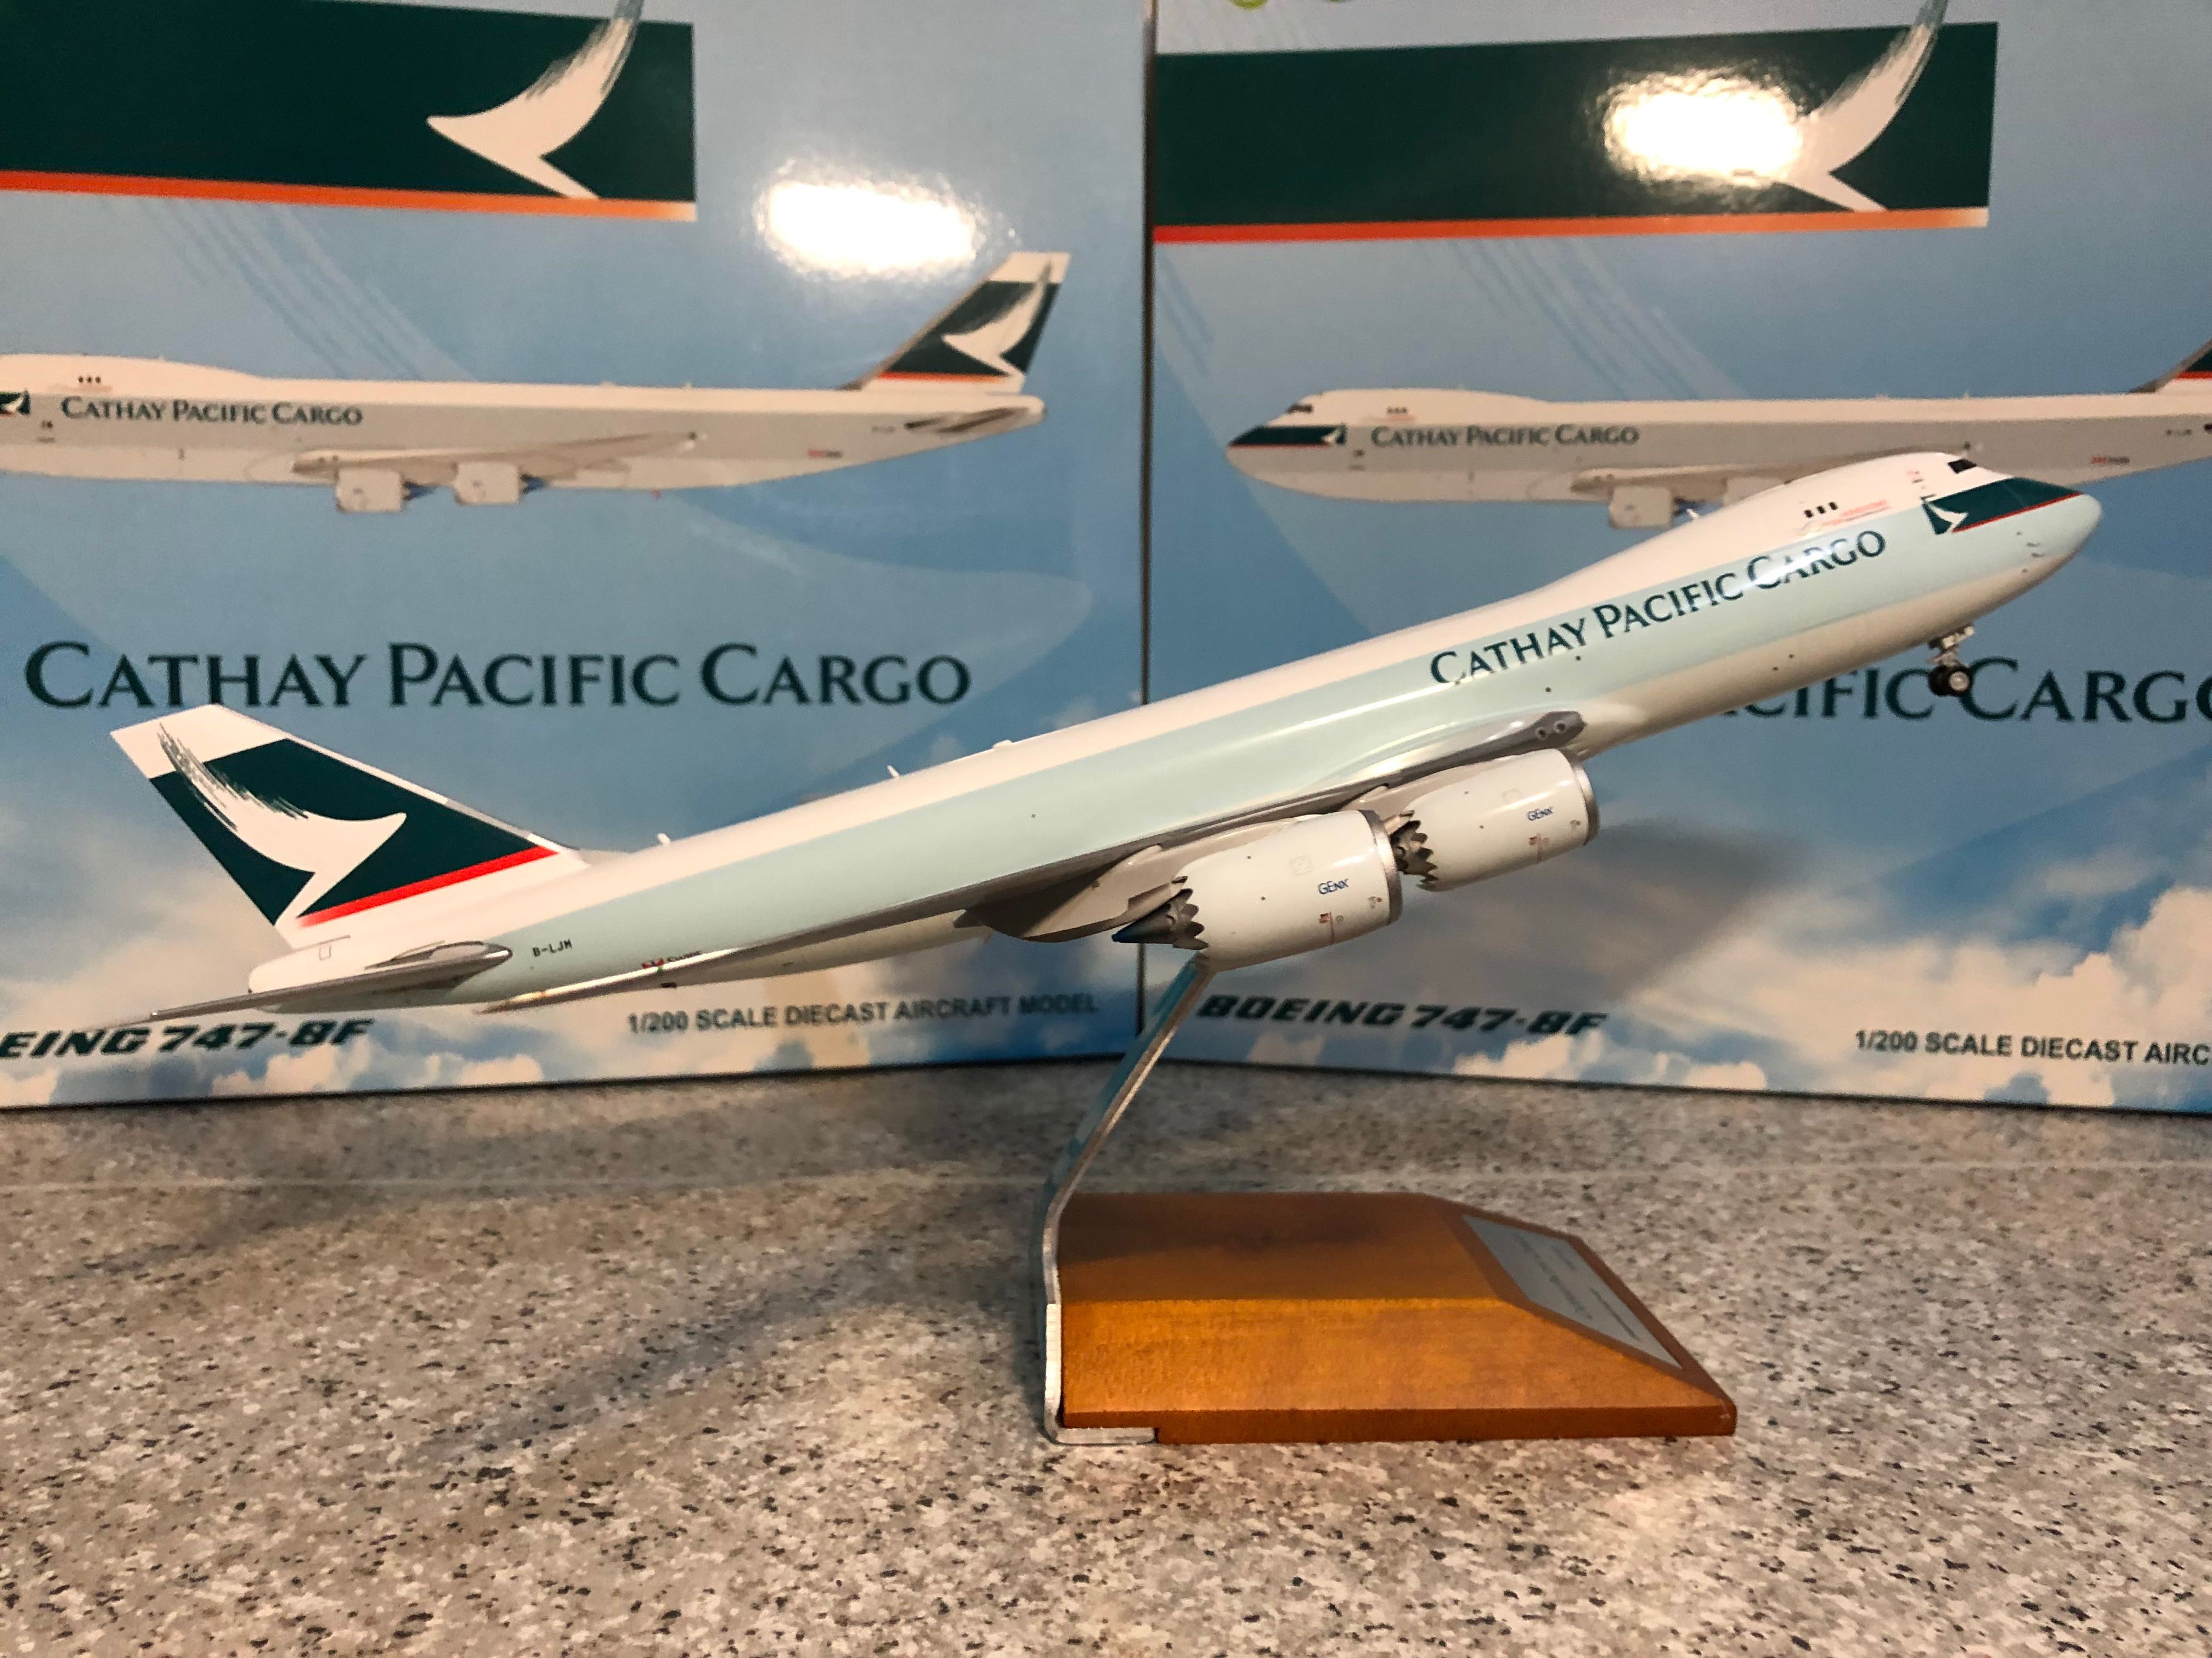 國泰貨運模型CATHAY PACIFIC CARGO 747-8F 1/200 Jc Wings B-LJM(問題